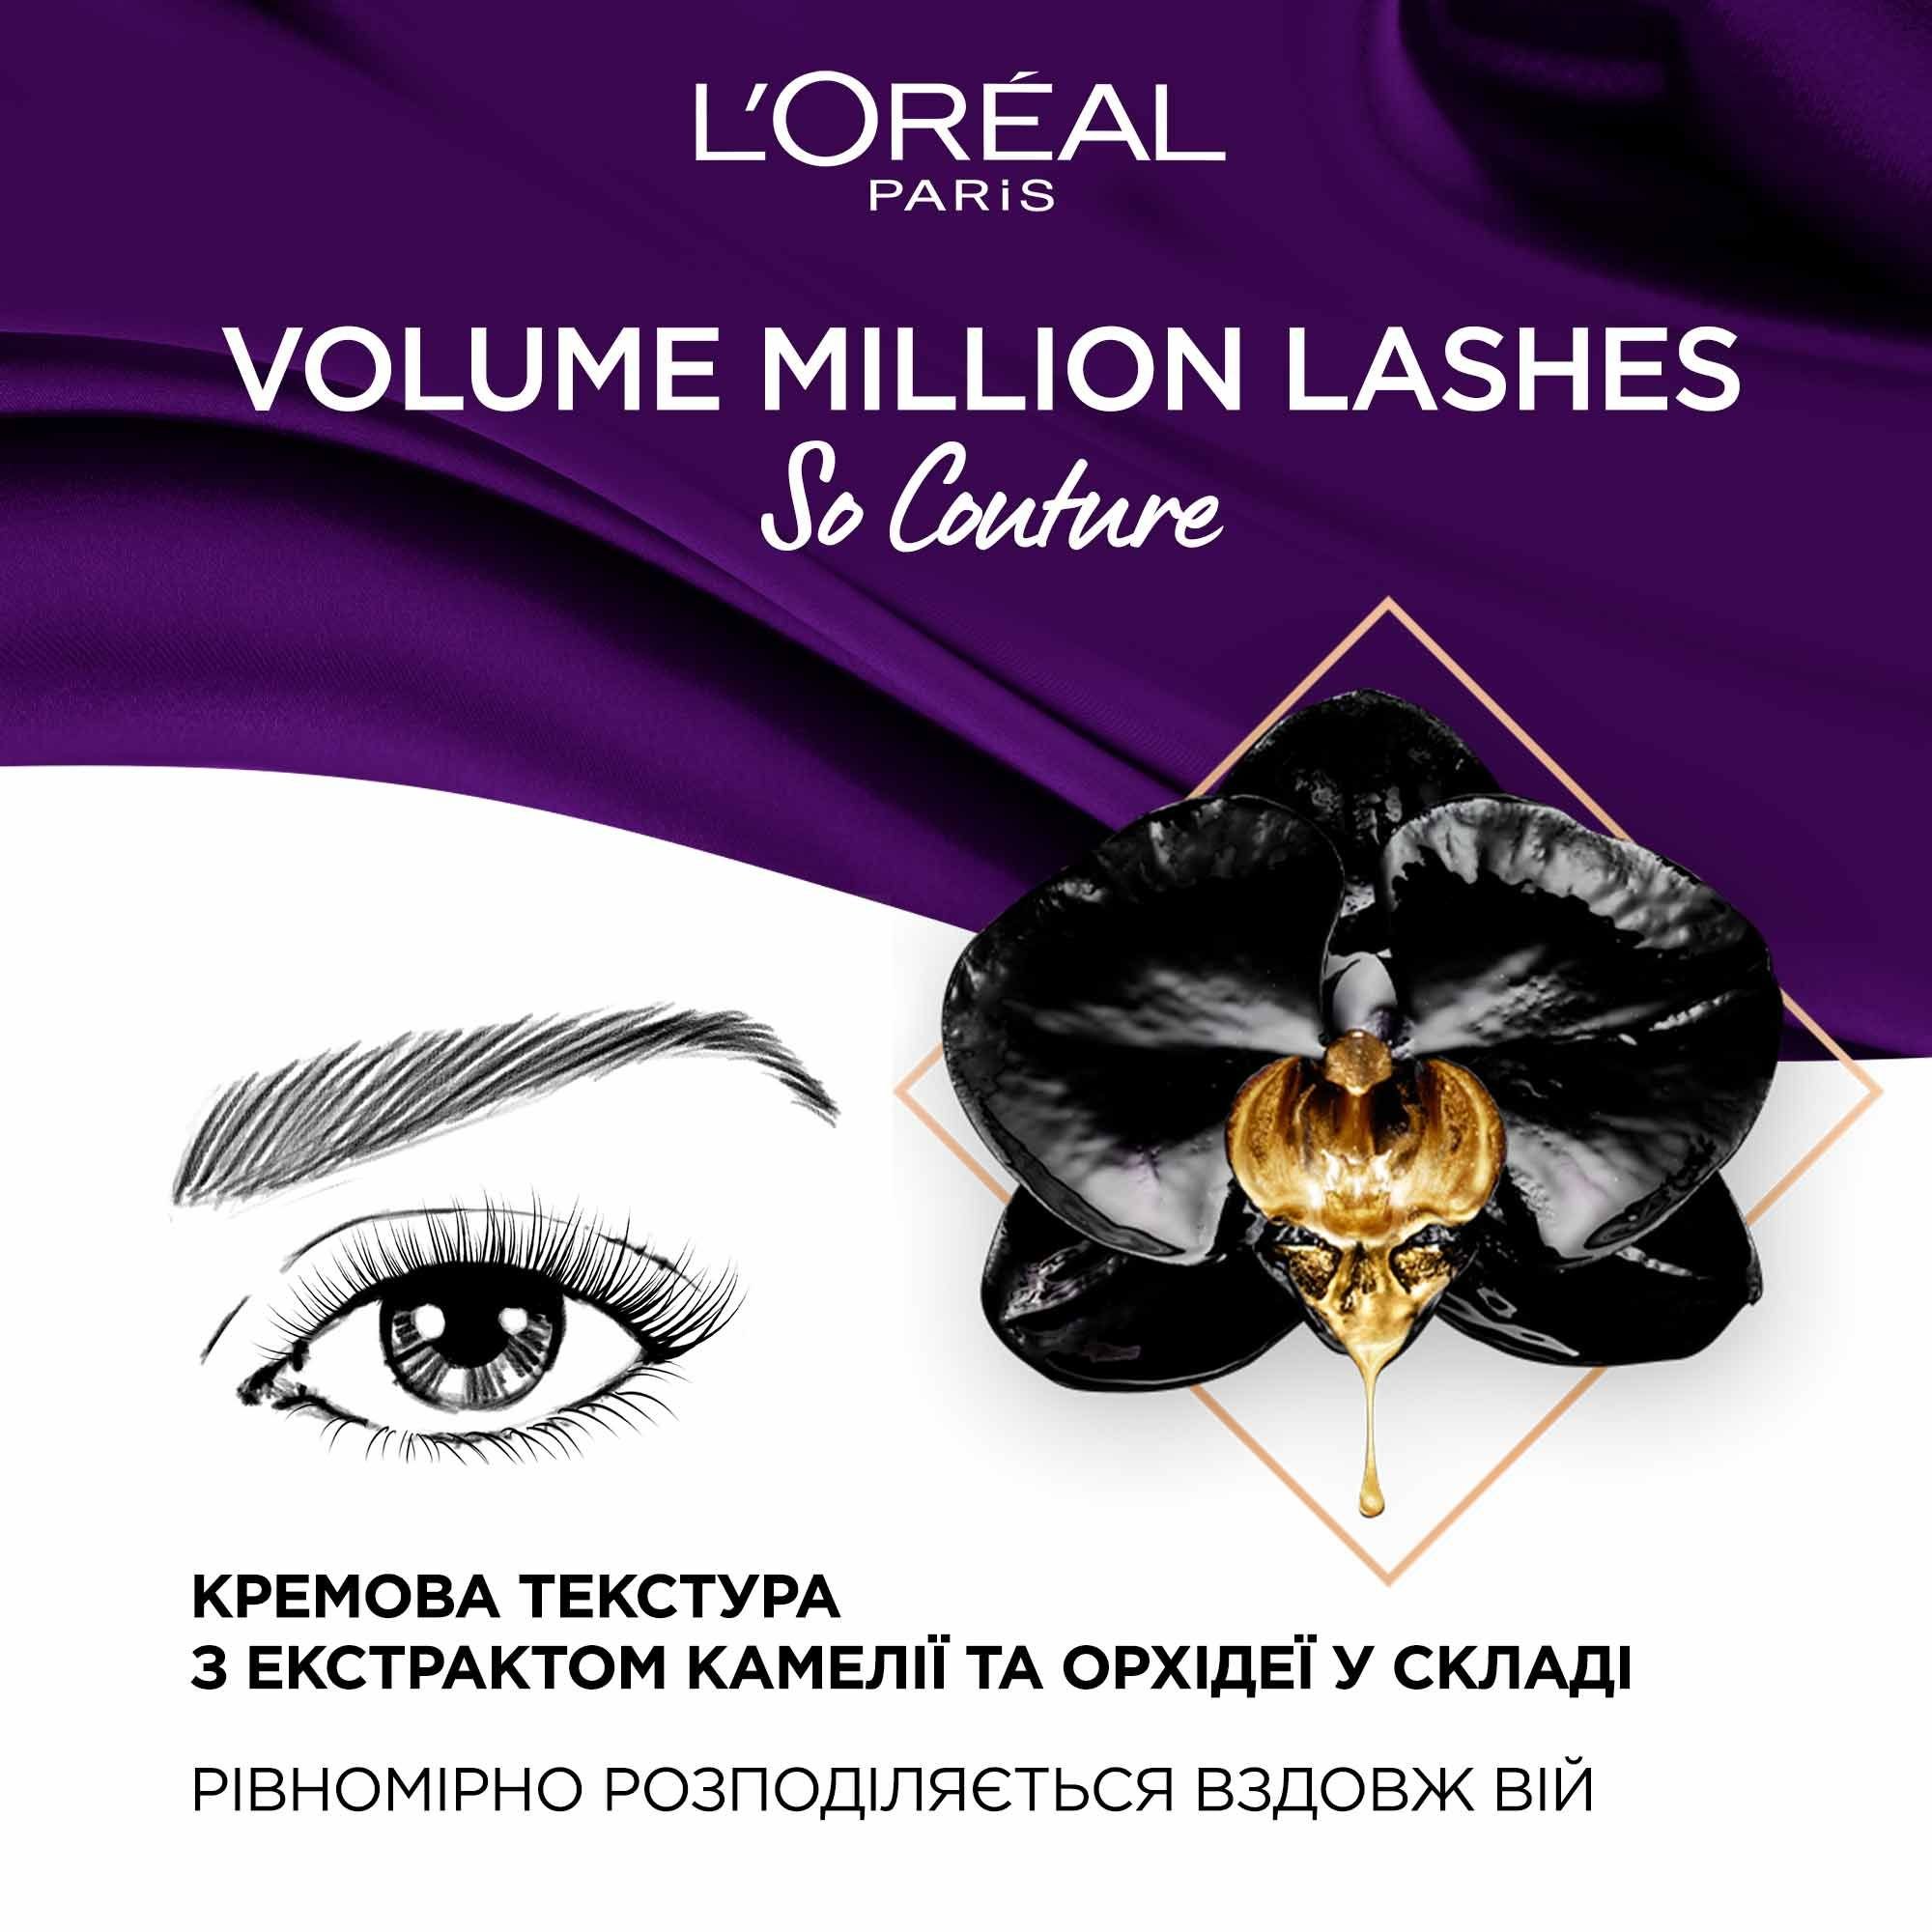 Тушь для ресниц L’Oréal Paris Volume Million Lashes So Couture, тон Черный, 9 мл (A8043400) - фото 7